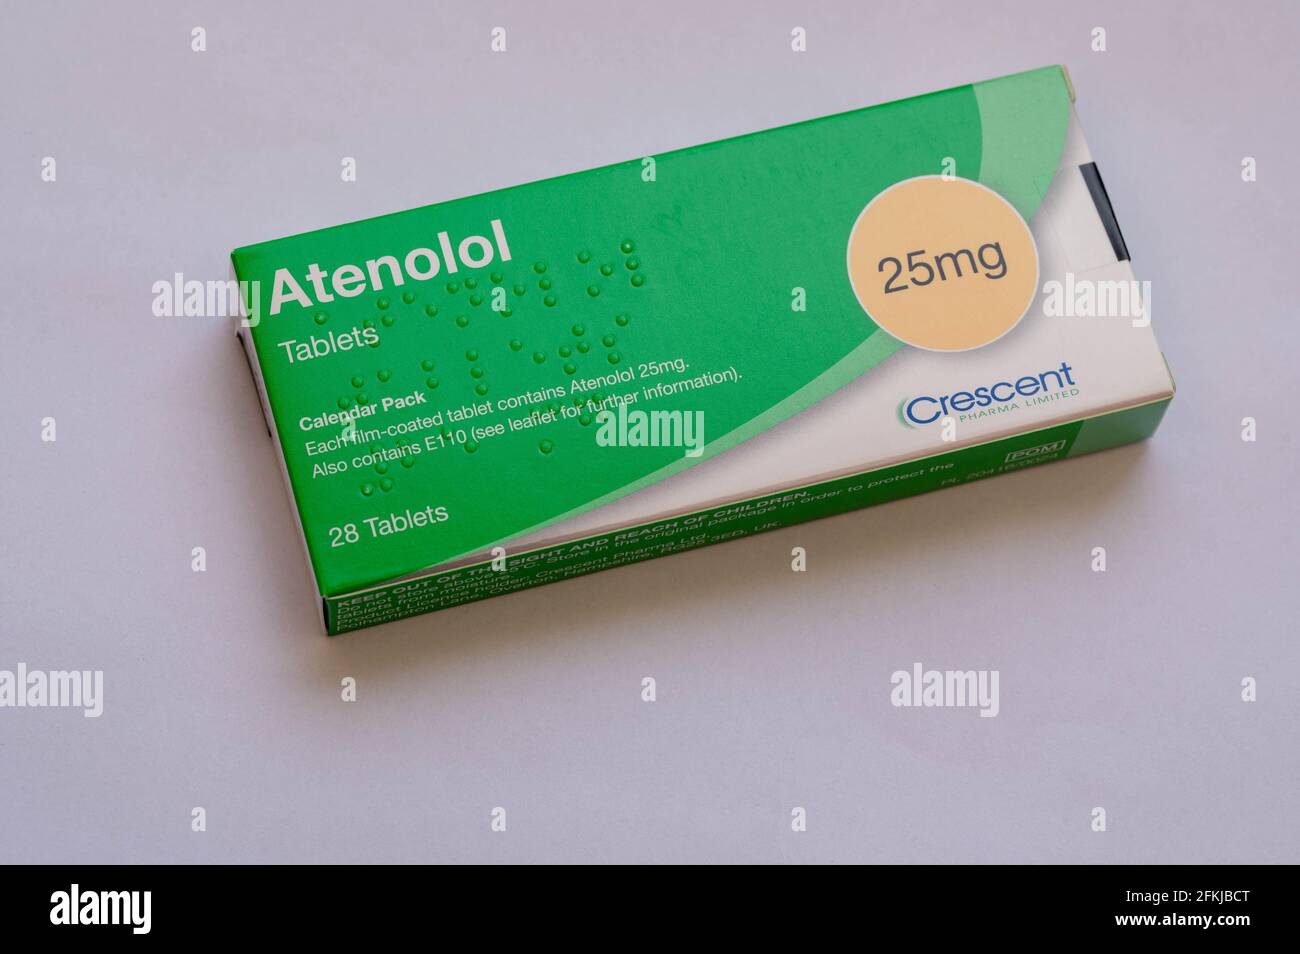 Atenolol tablets -Fotos und -Bildmaterial in hoher Auflösung – Alamy